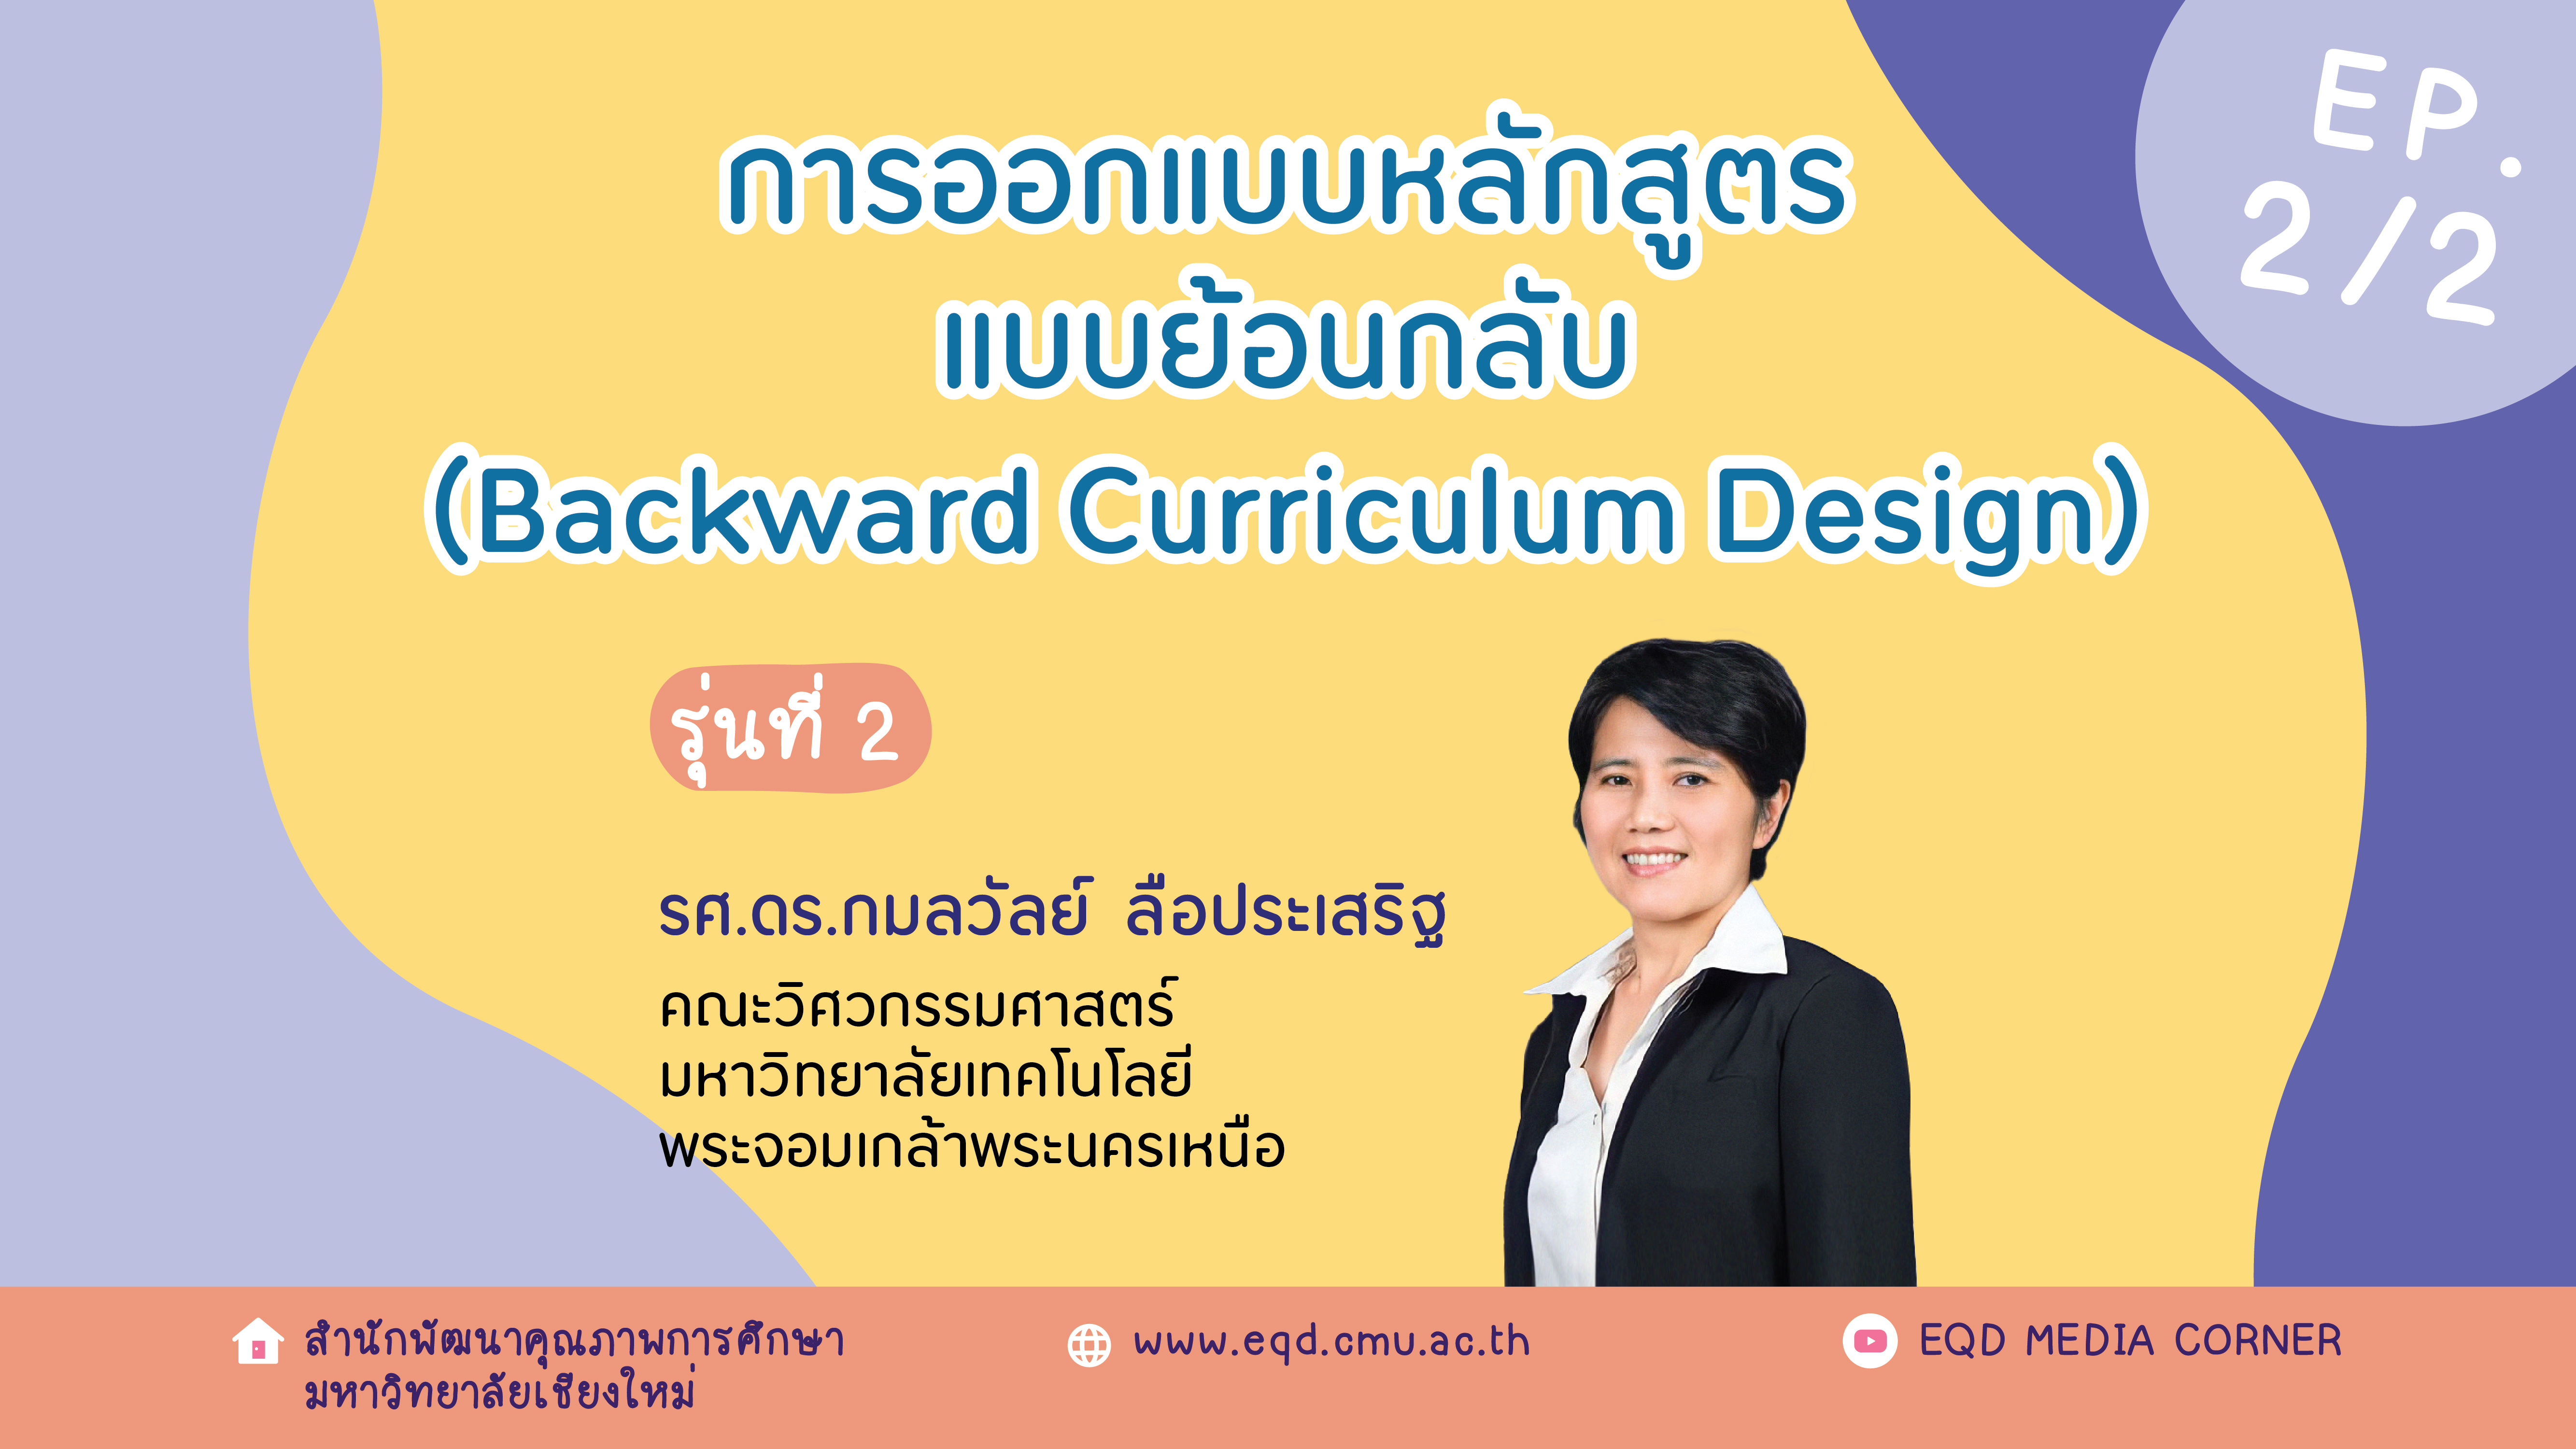 Backward Curriculum Design